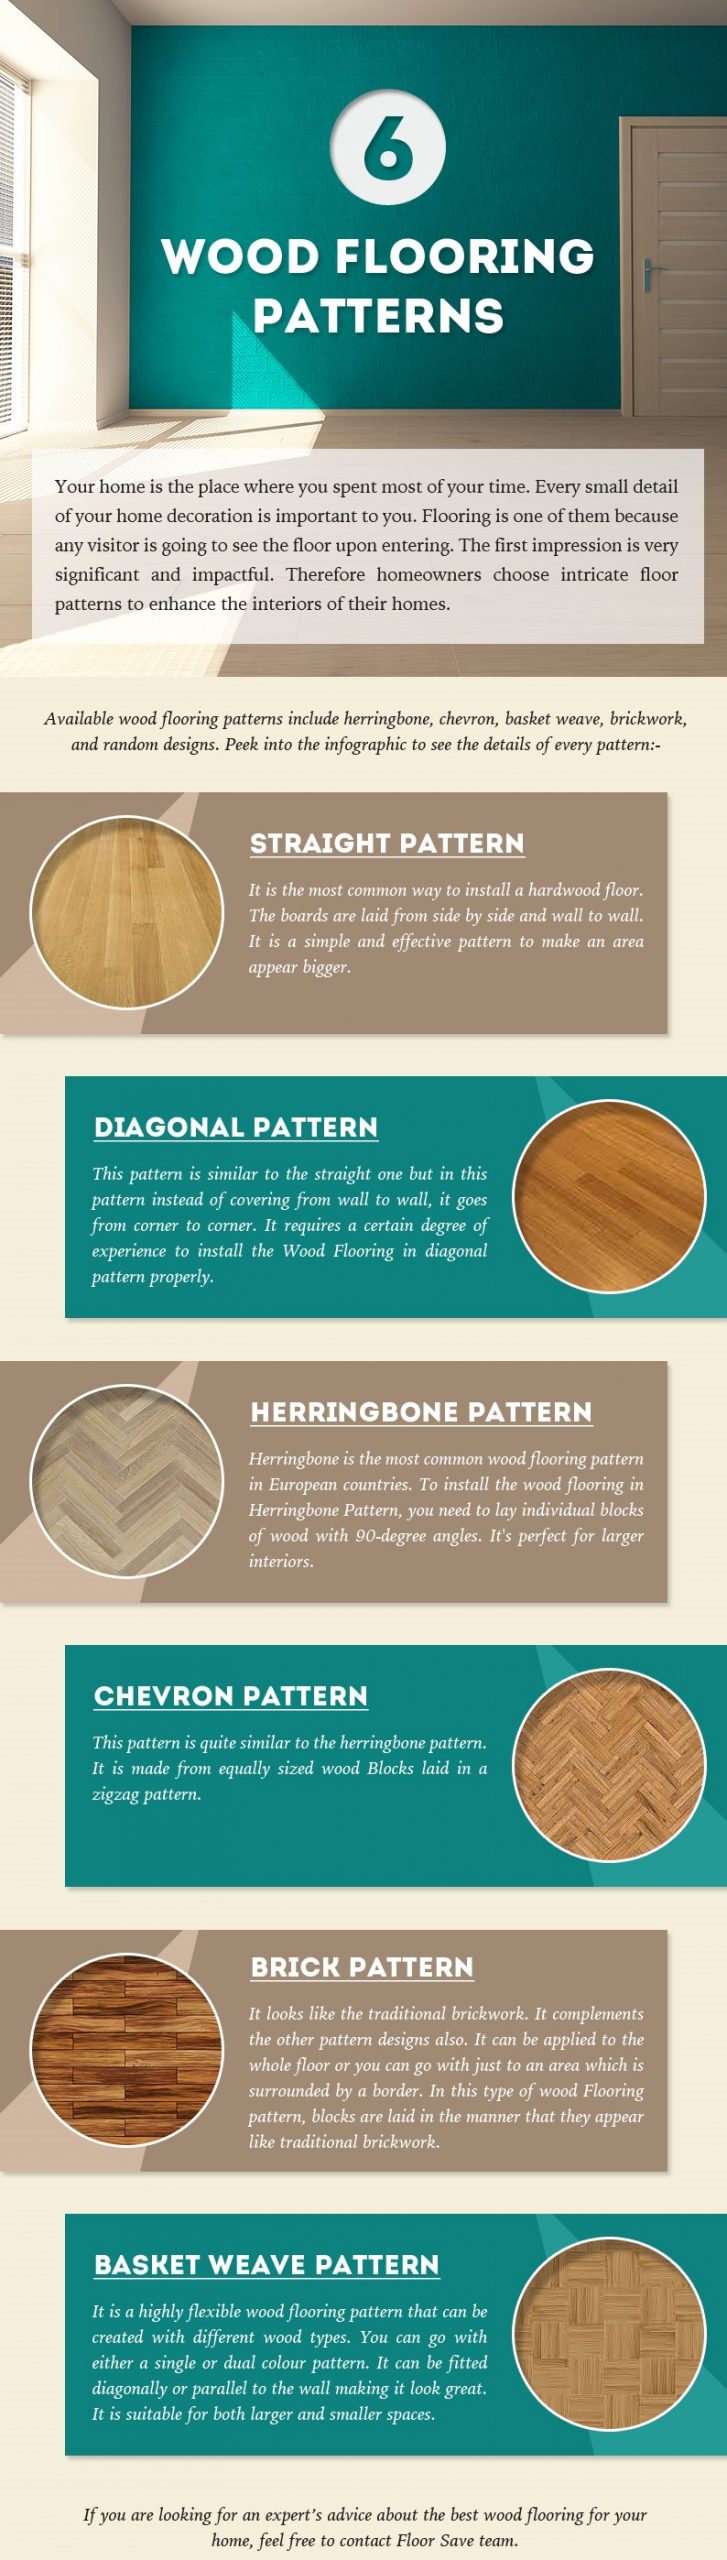 Wood-Flooring-Patterns